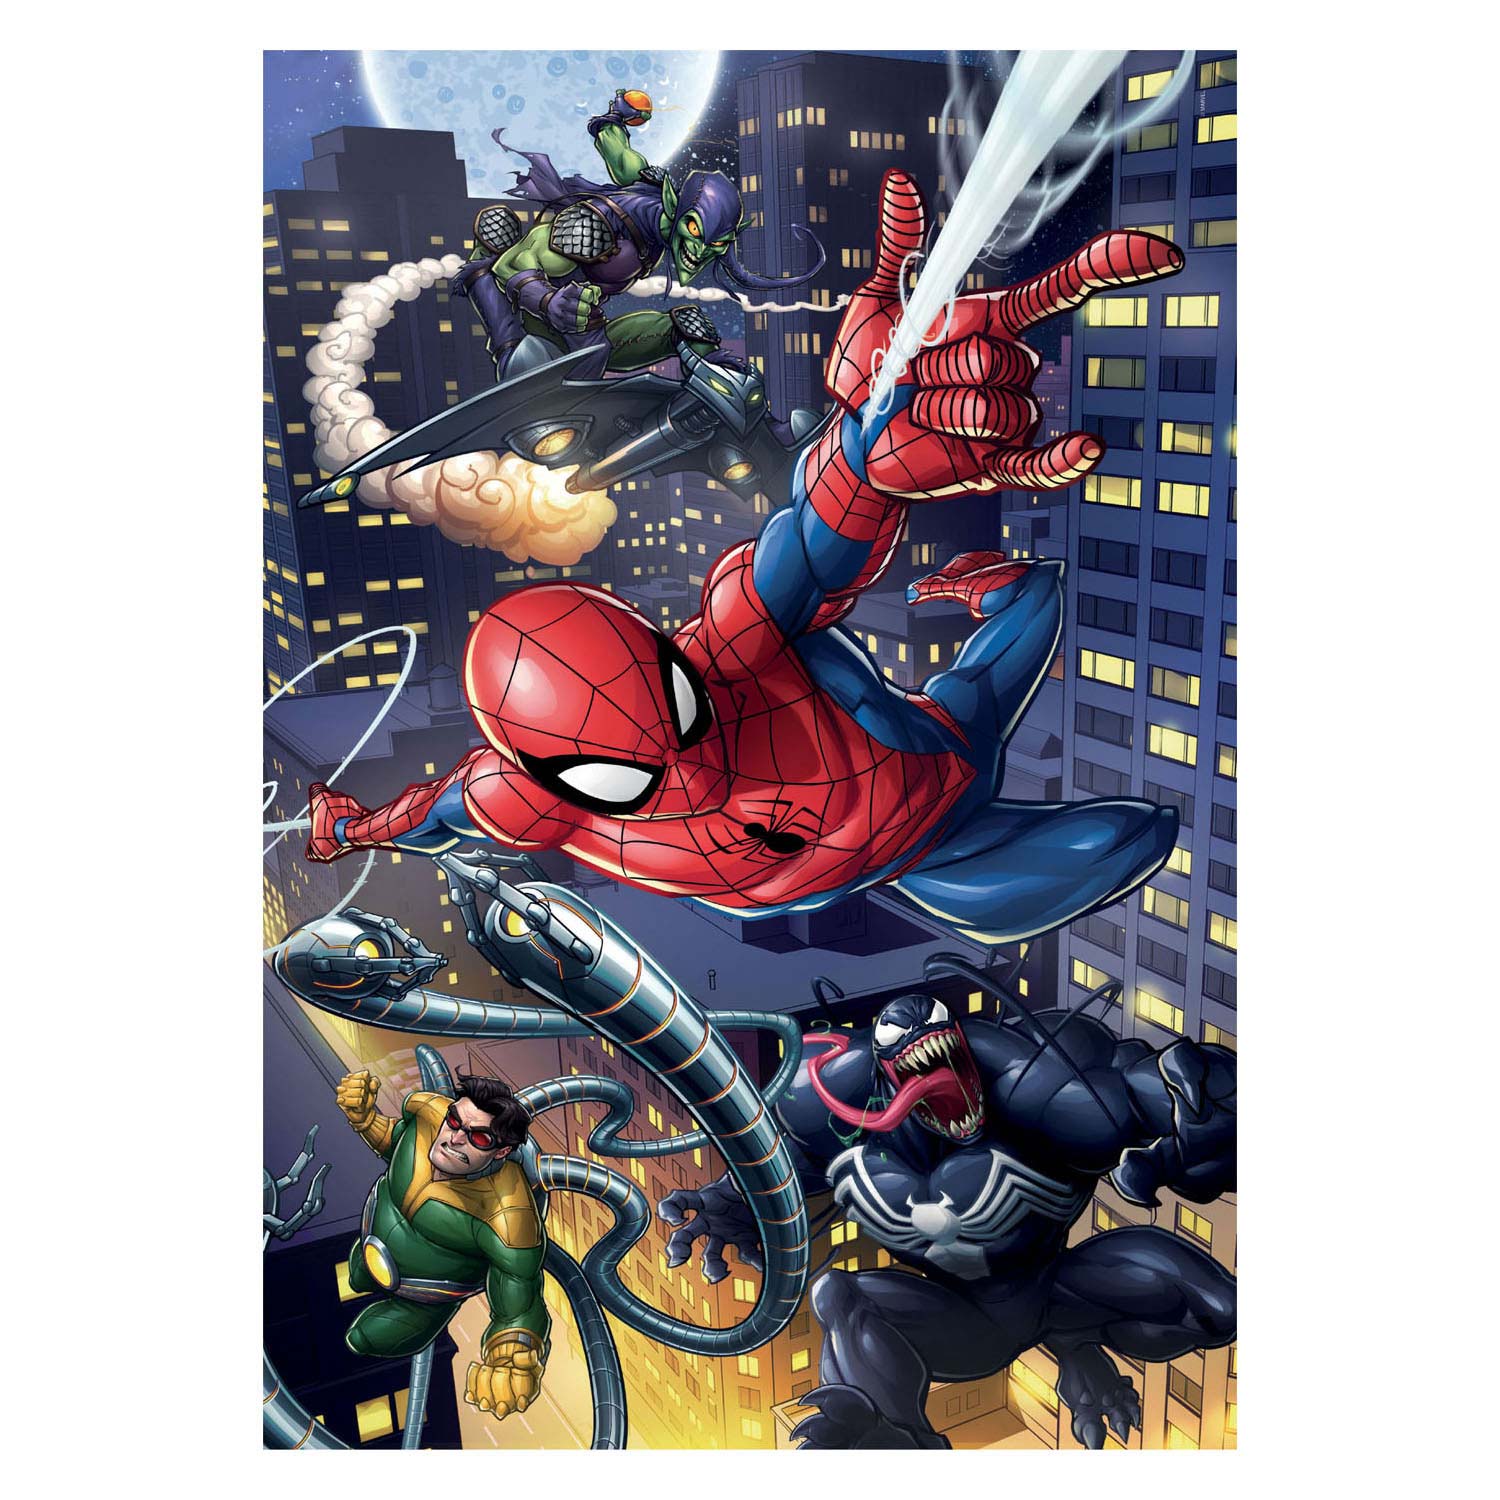 Clementoni Puzzle - Spiderman, 180 Teile.